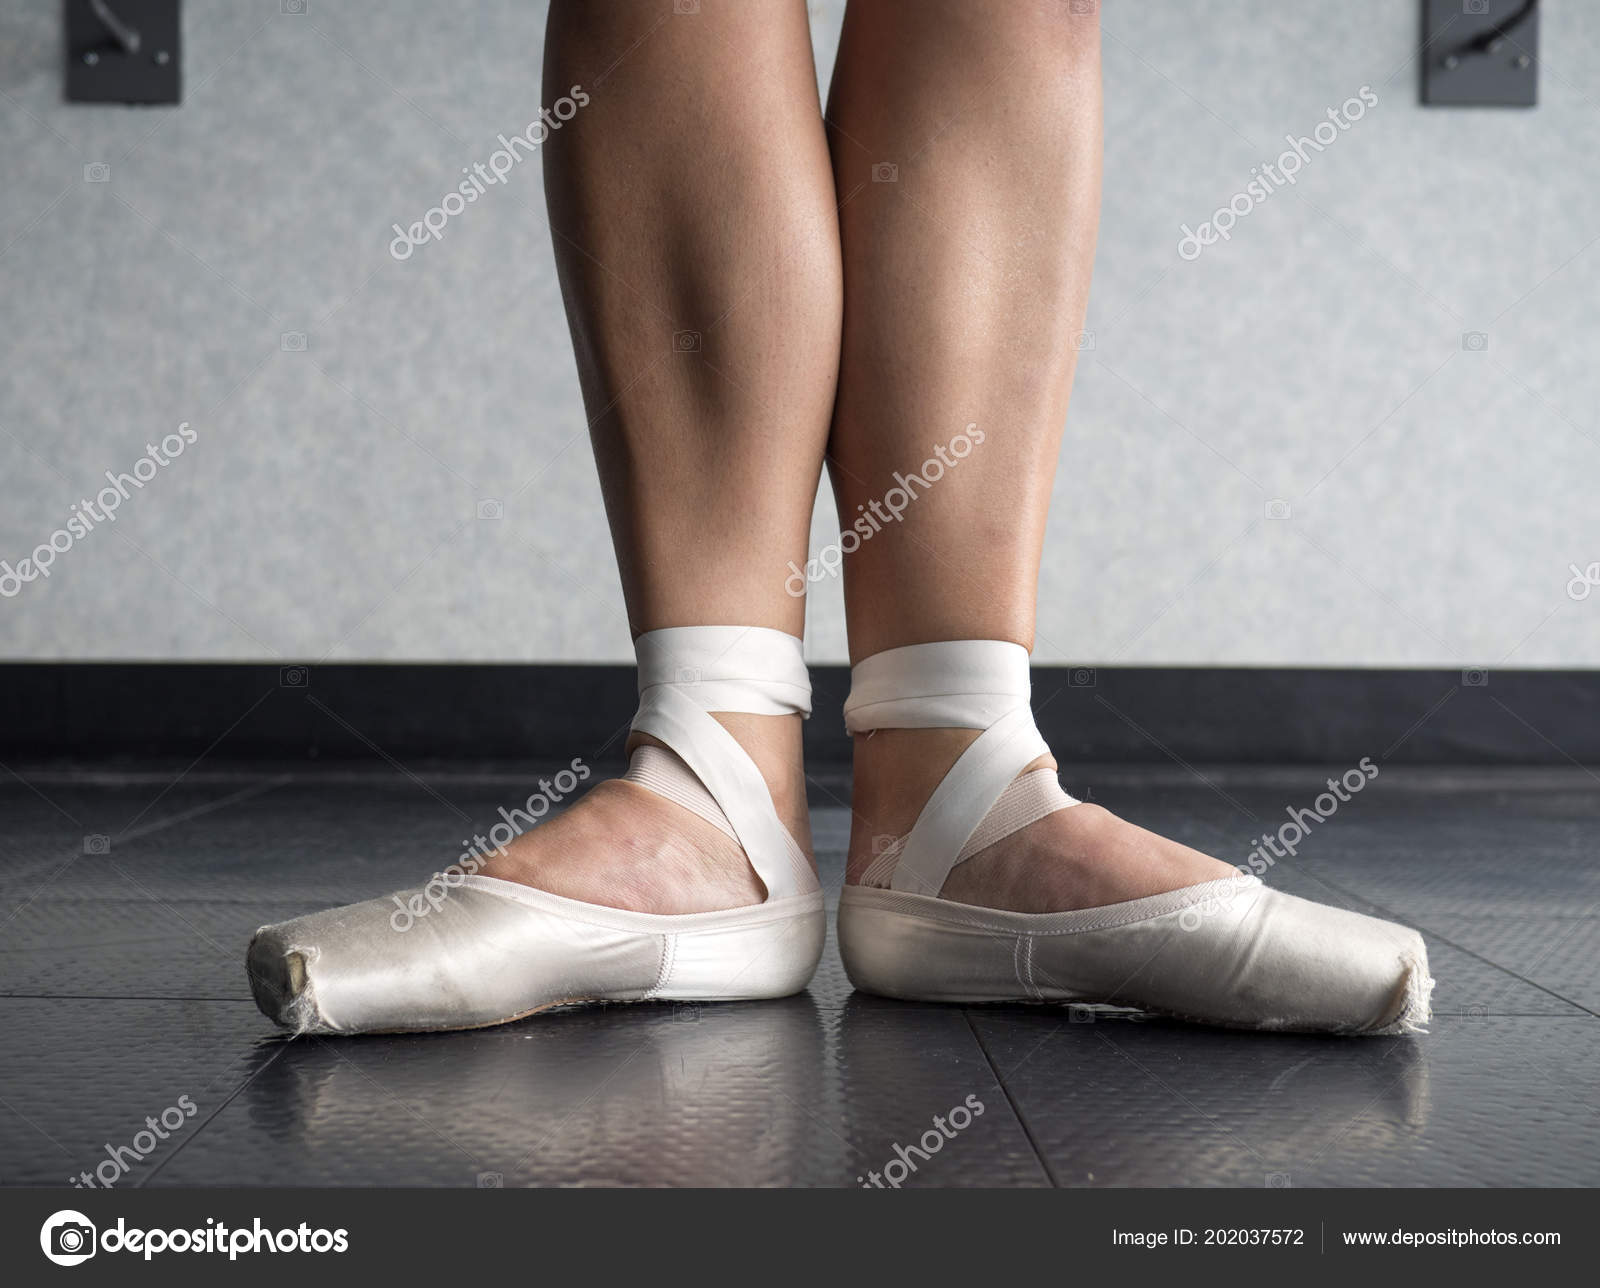 https://st4.depositphotos.com/13814304/20203/i/1600/depositphotos_202037572-stock-photo-ballerina-ballet-first-position-ballet.jpg